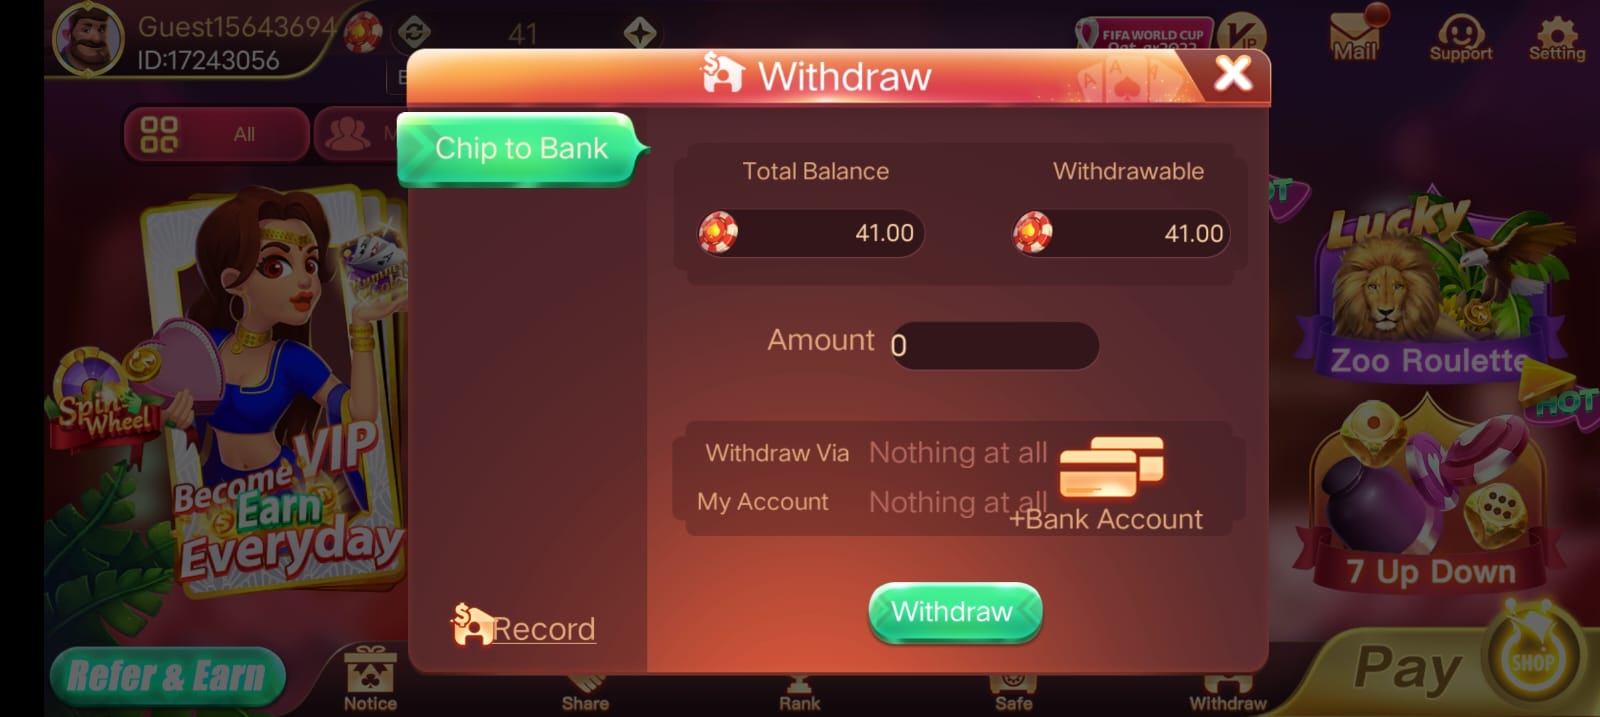 Withdrawal Money In "Rummy Posh App"